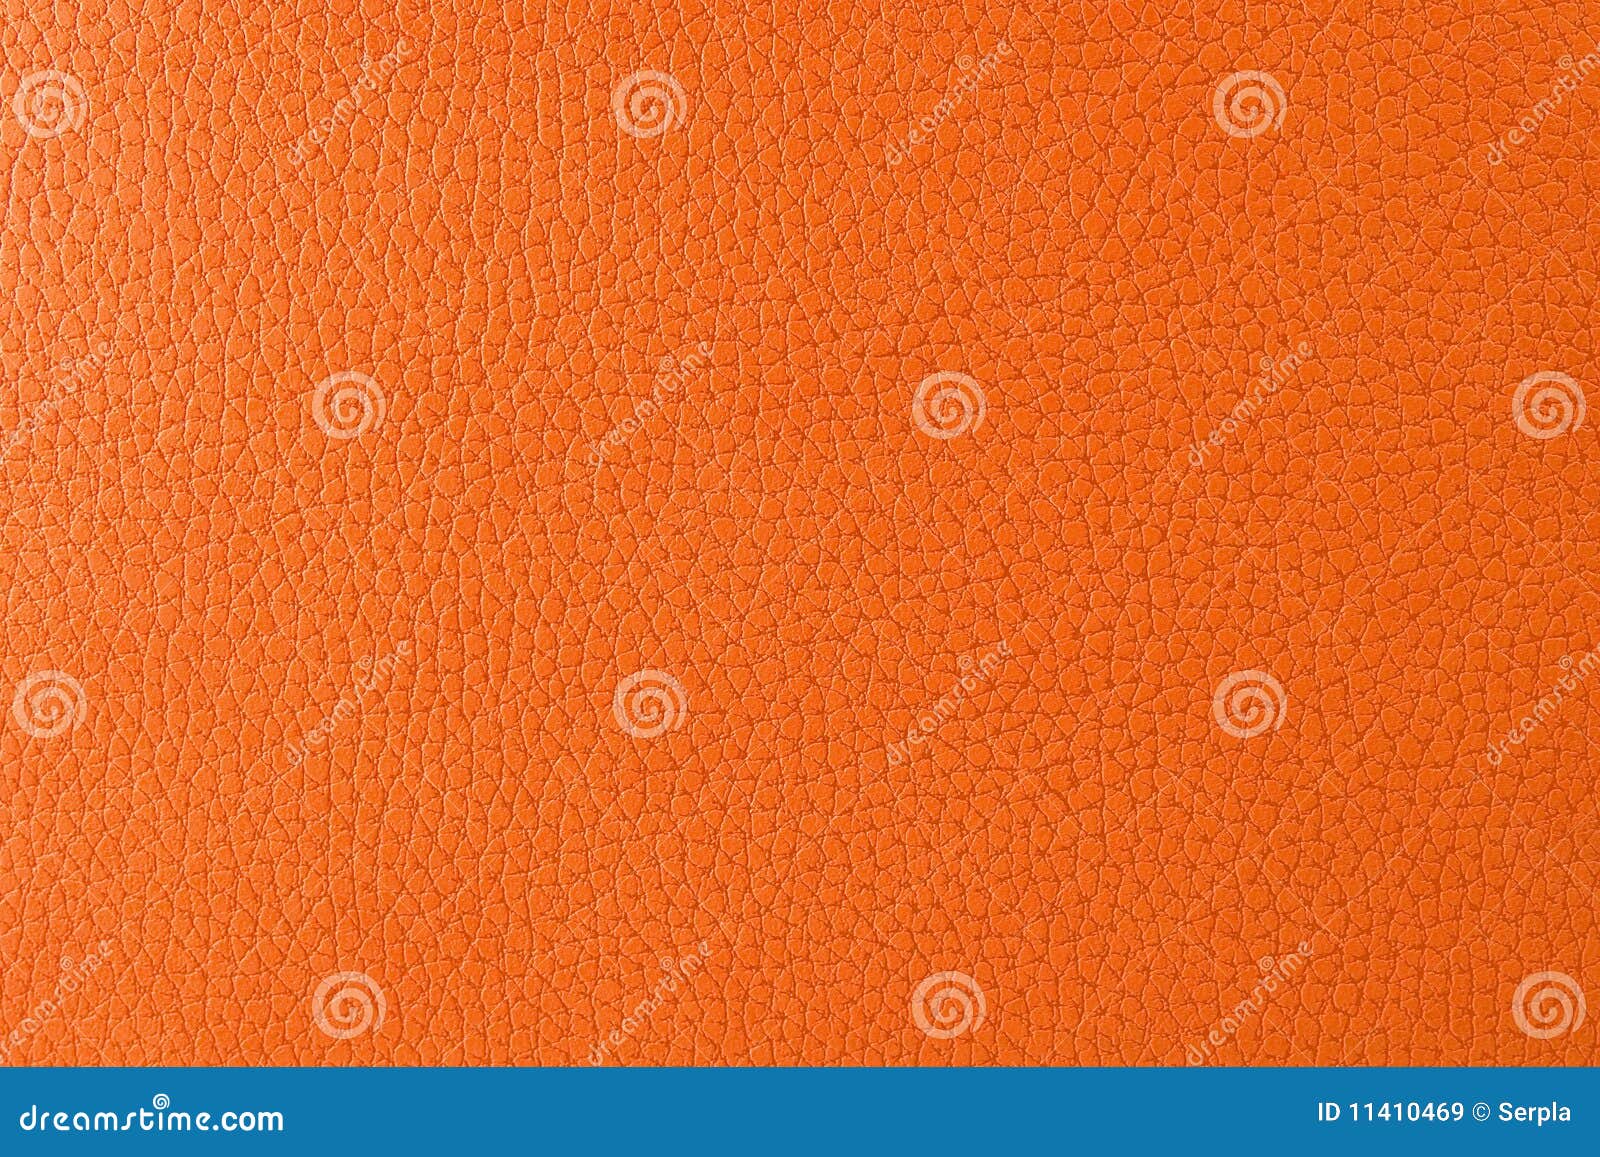 Closeup Texture Of Orange Imitation Leather Stock Image Image Of